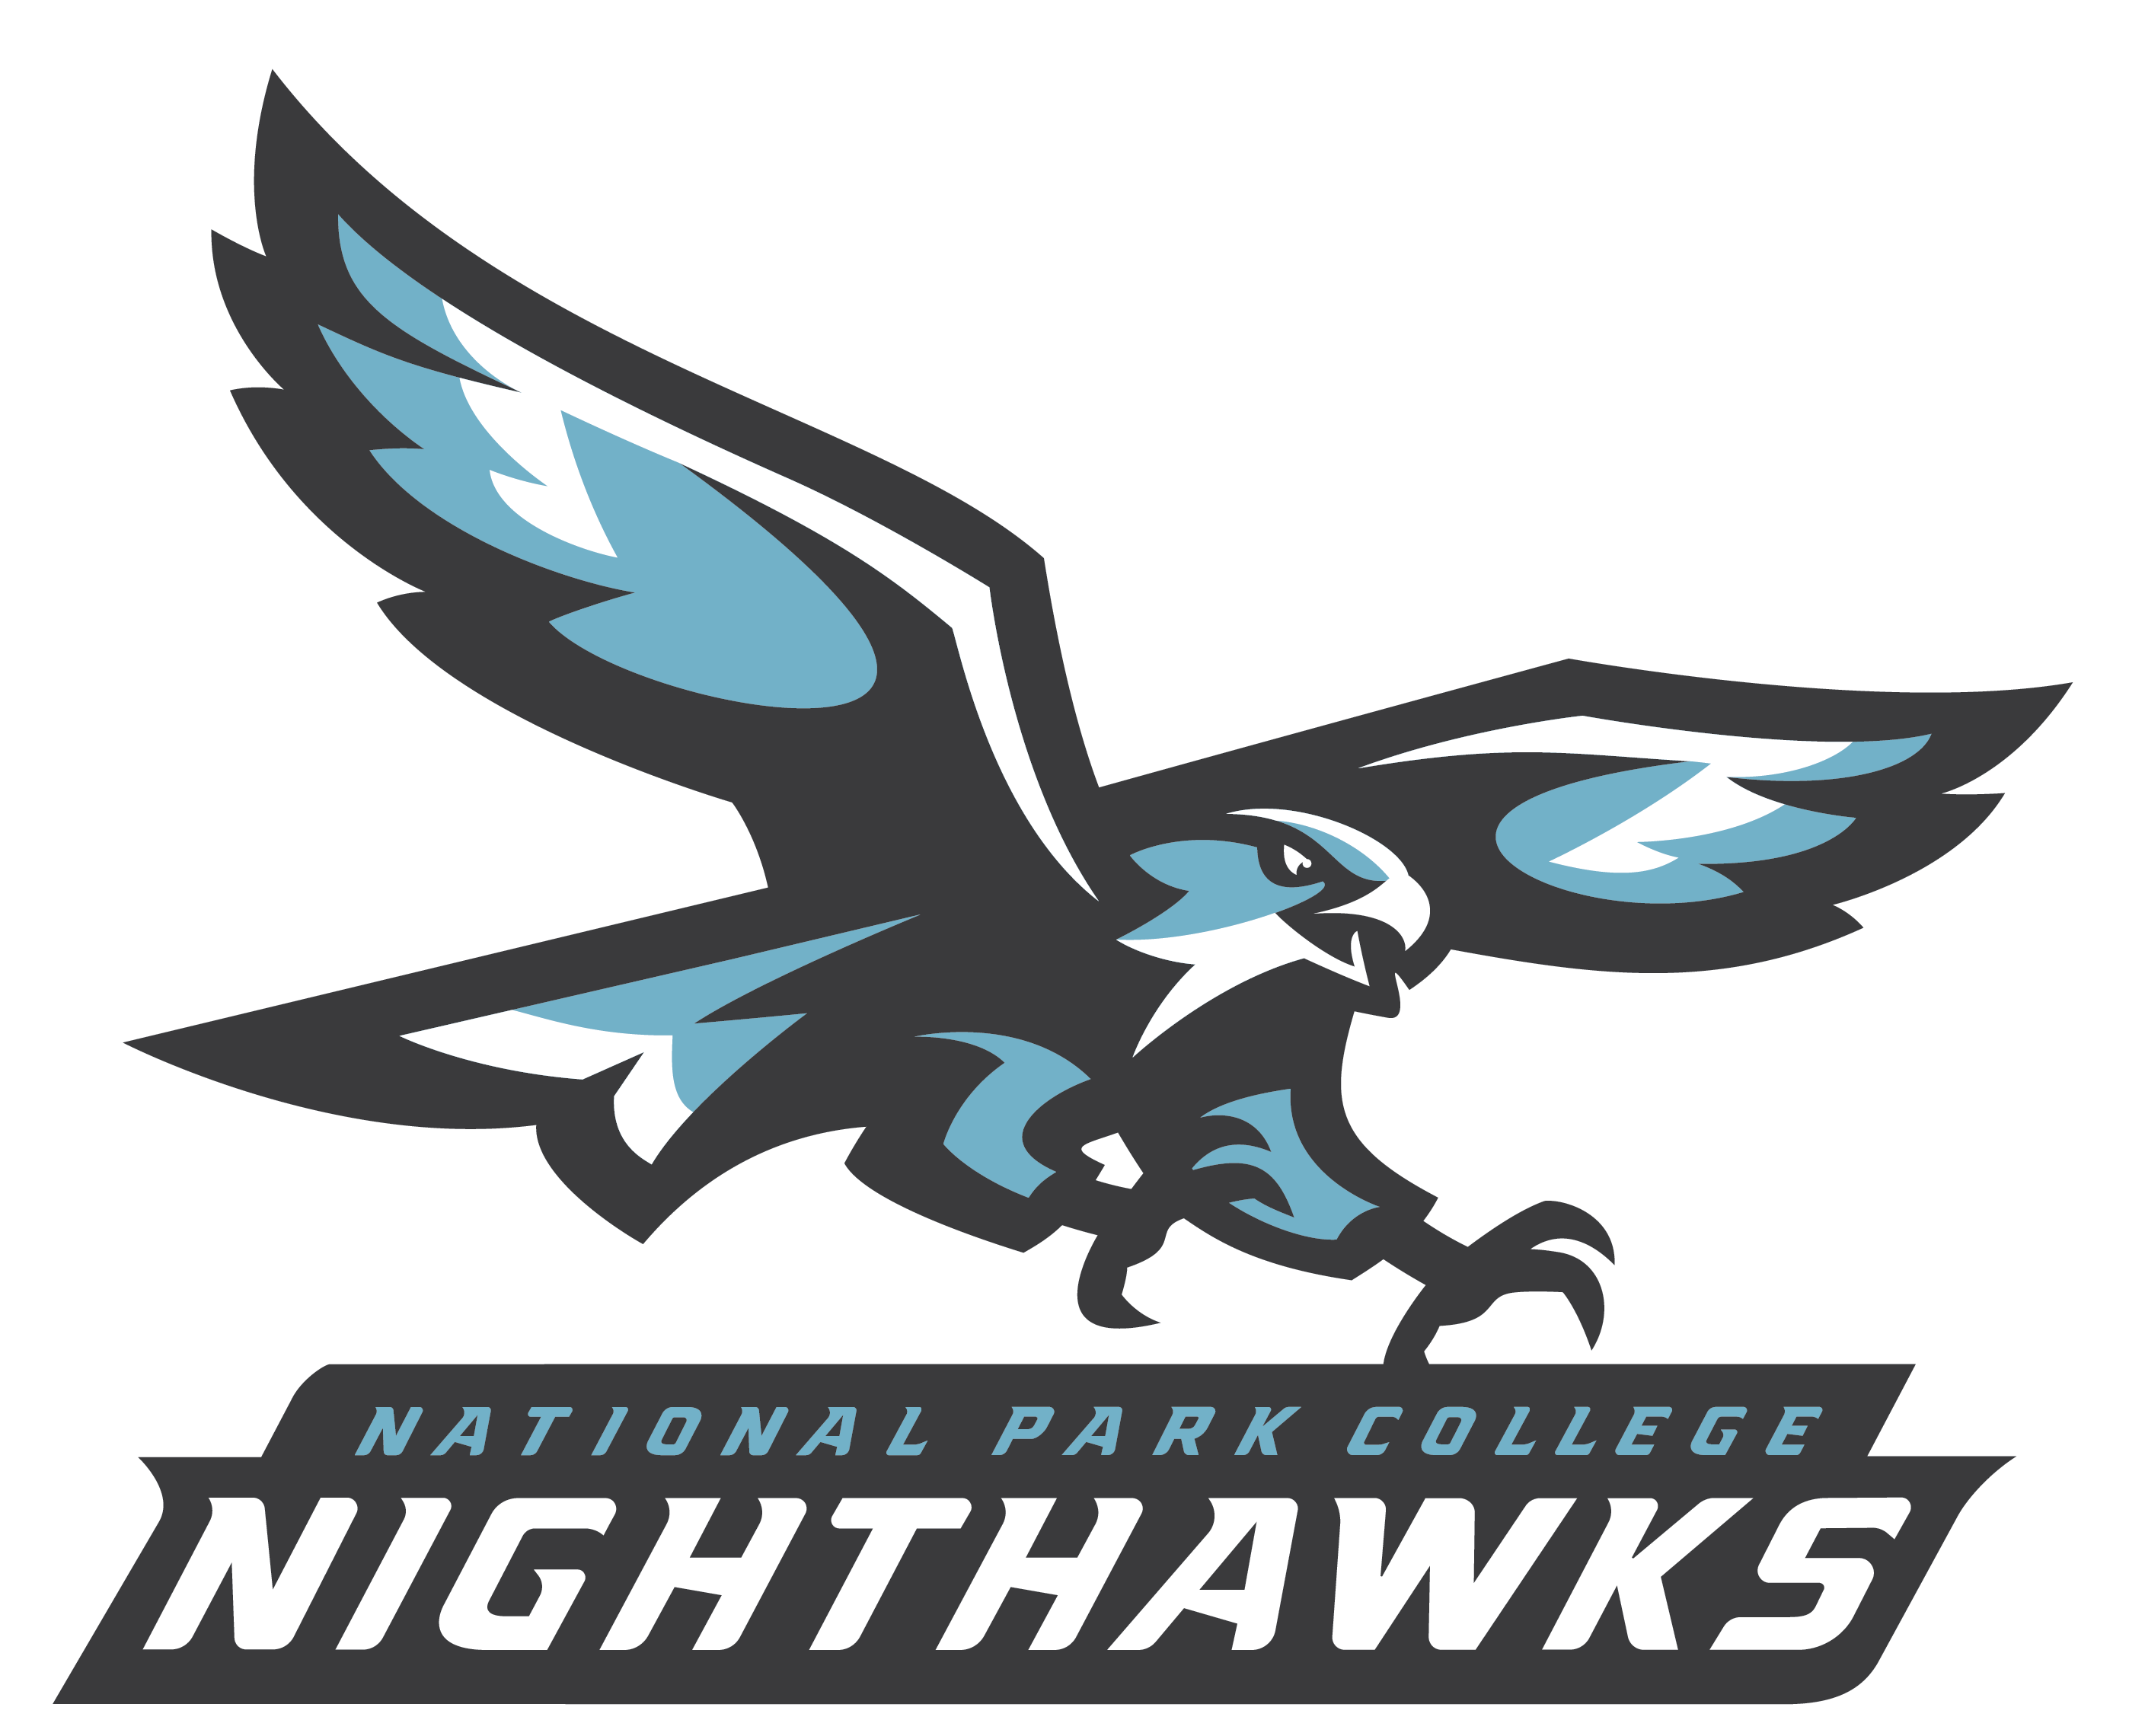 Nighthawk primary logo